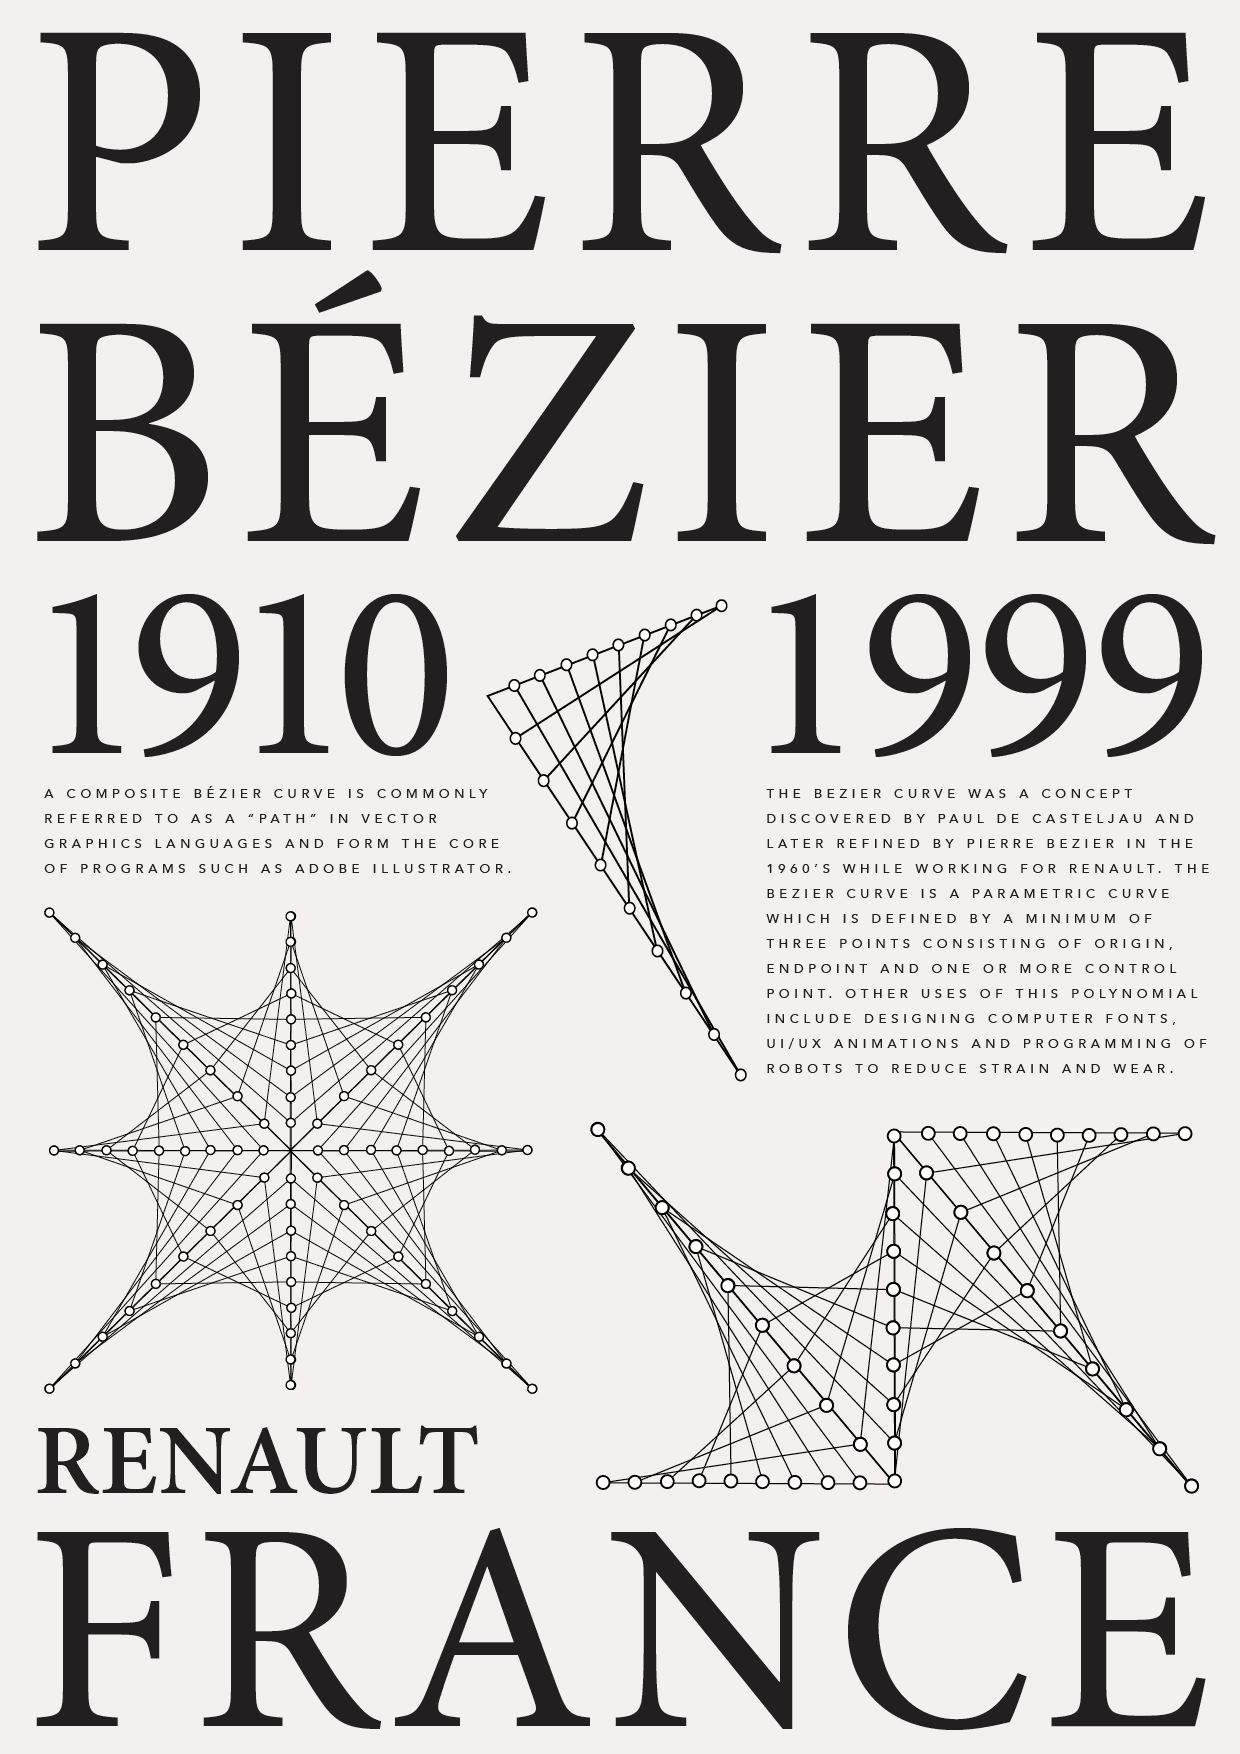 Pierre Bézier Poster (Digital Item)